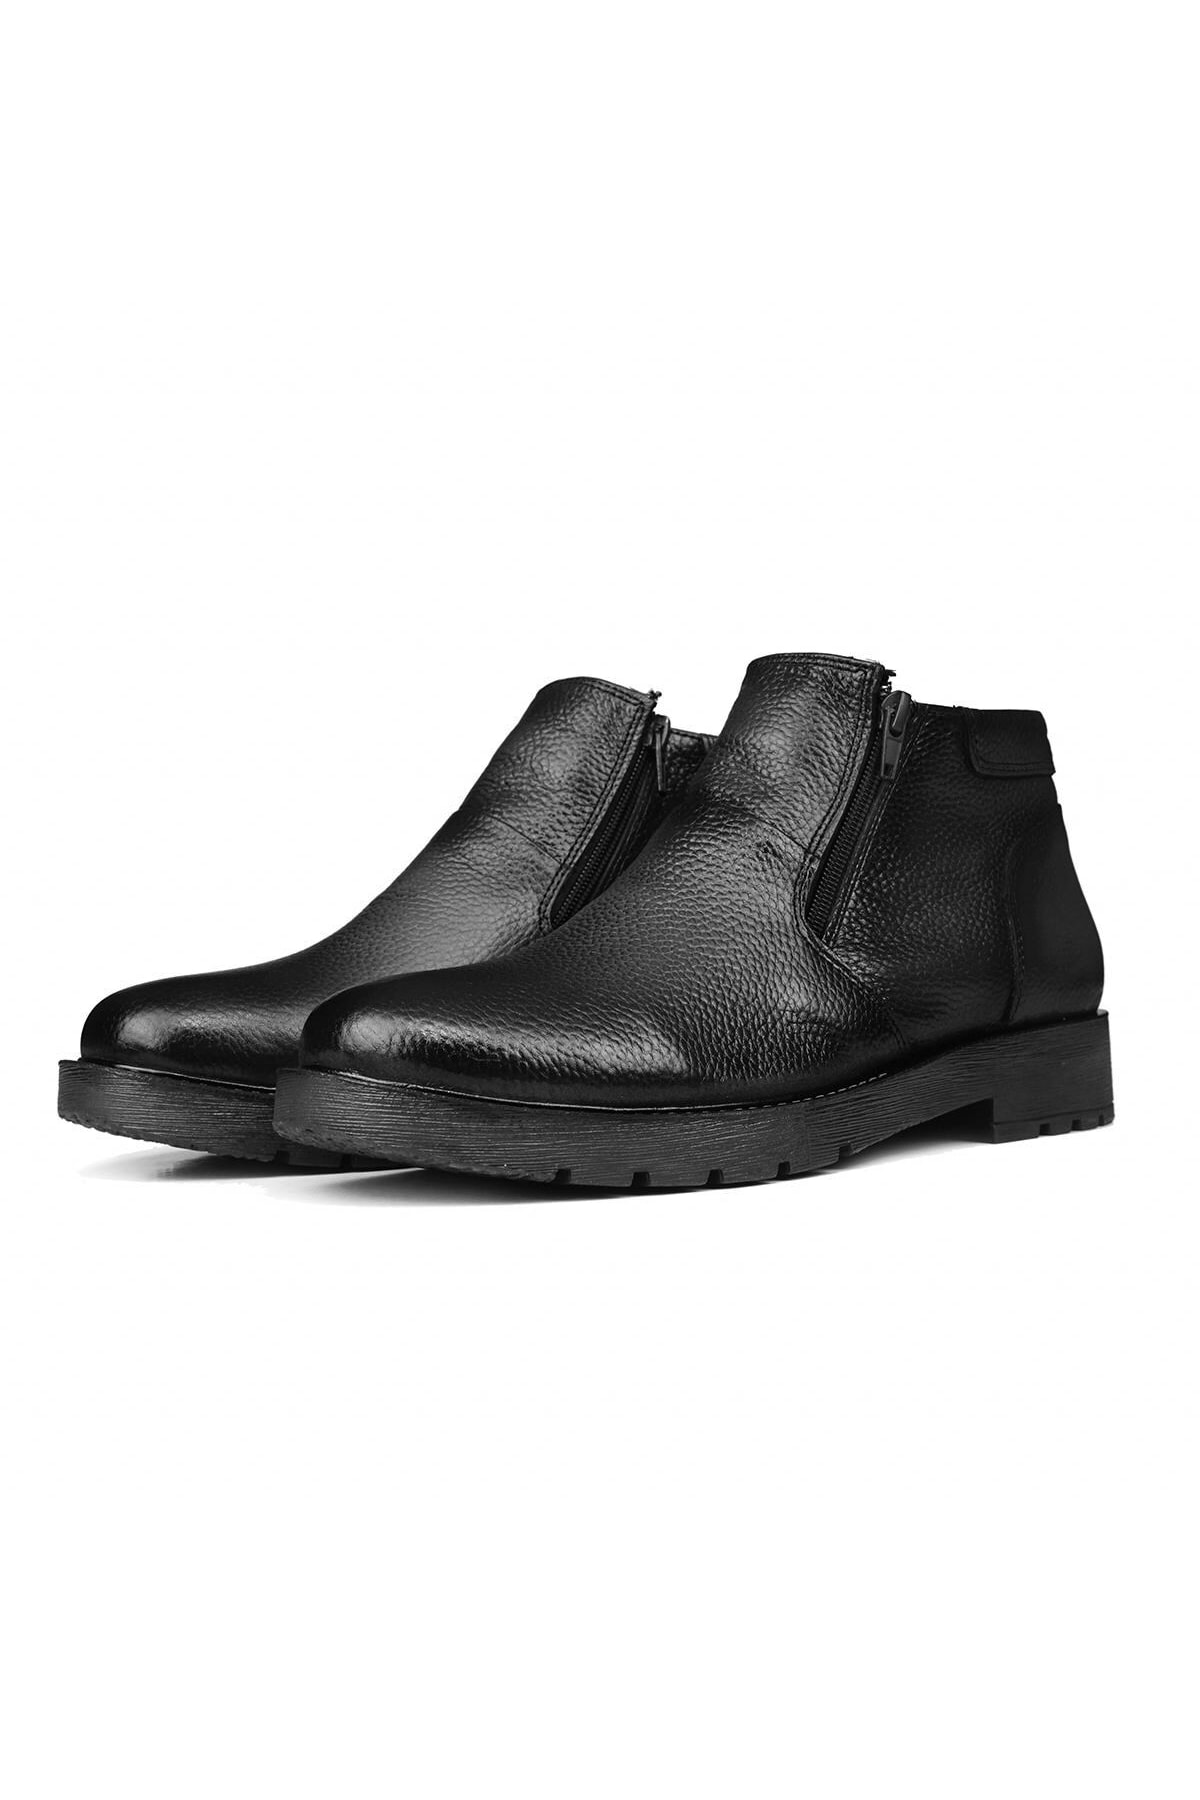 Levně Ducavelli Chelsea Genuine Leather Anti-Slip Sole Zippered Casual Boots Black.